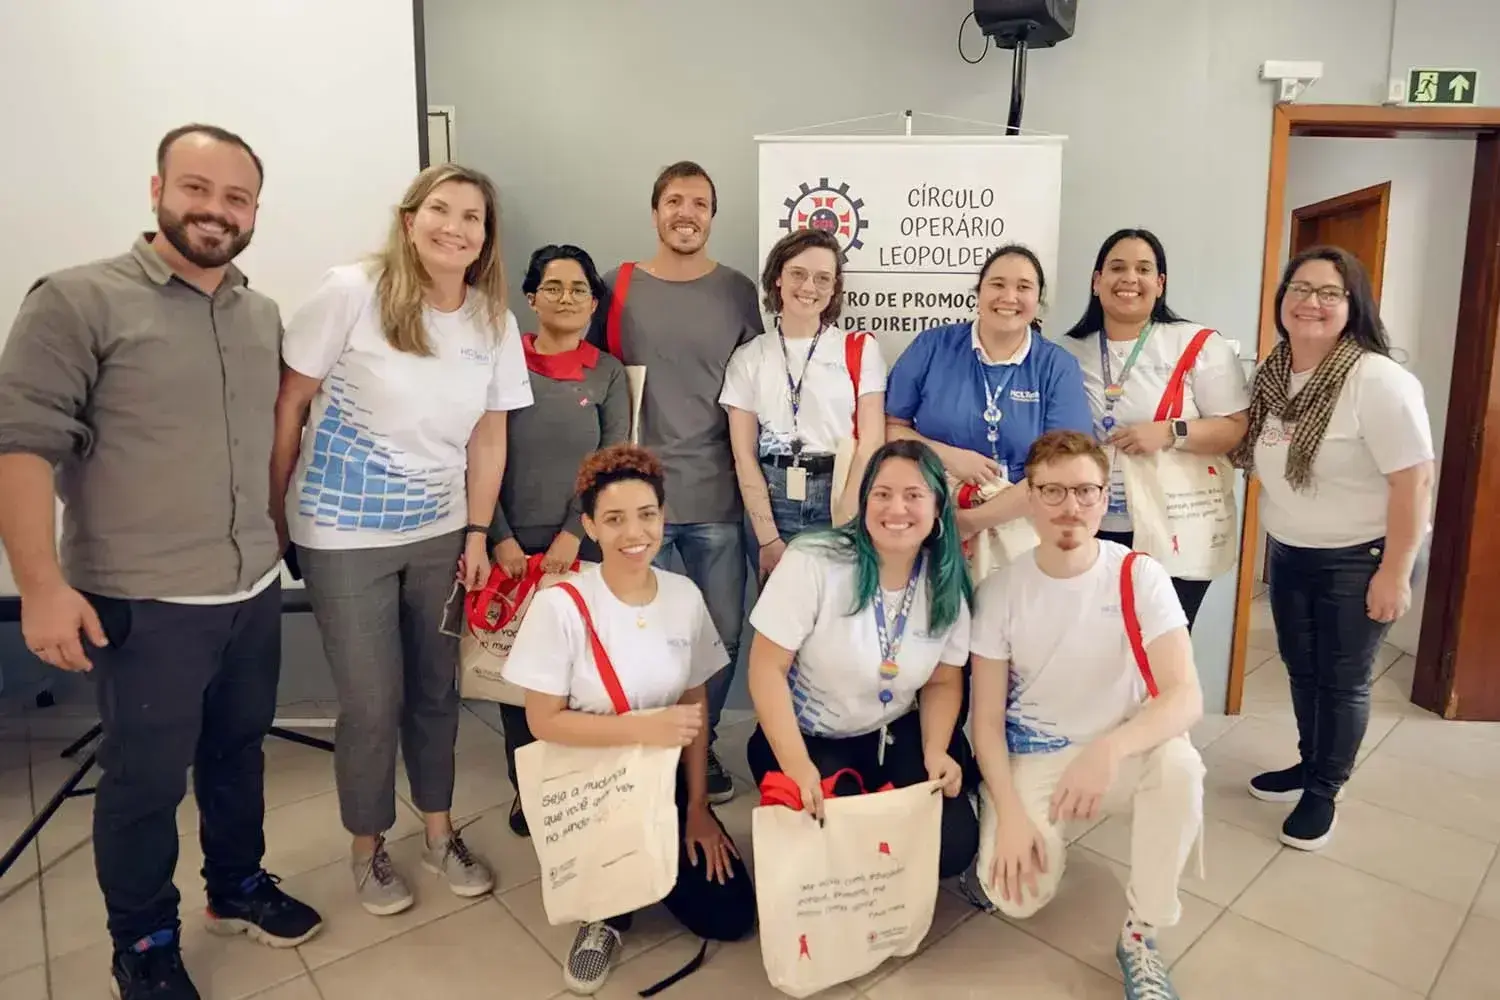 Volunteer event in São Leopoldo assisting children in social vulnerability